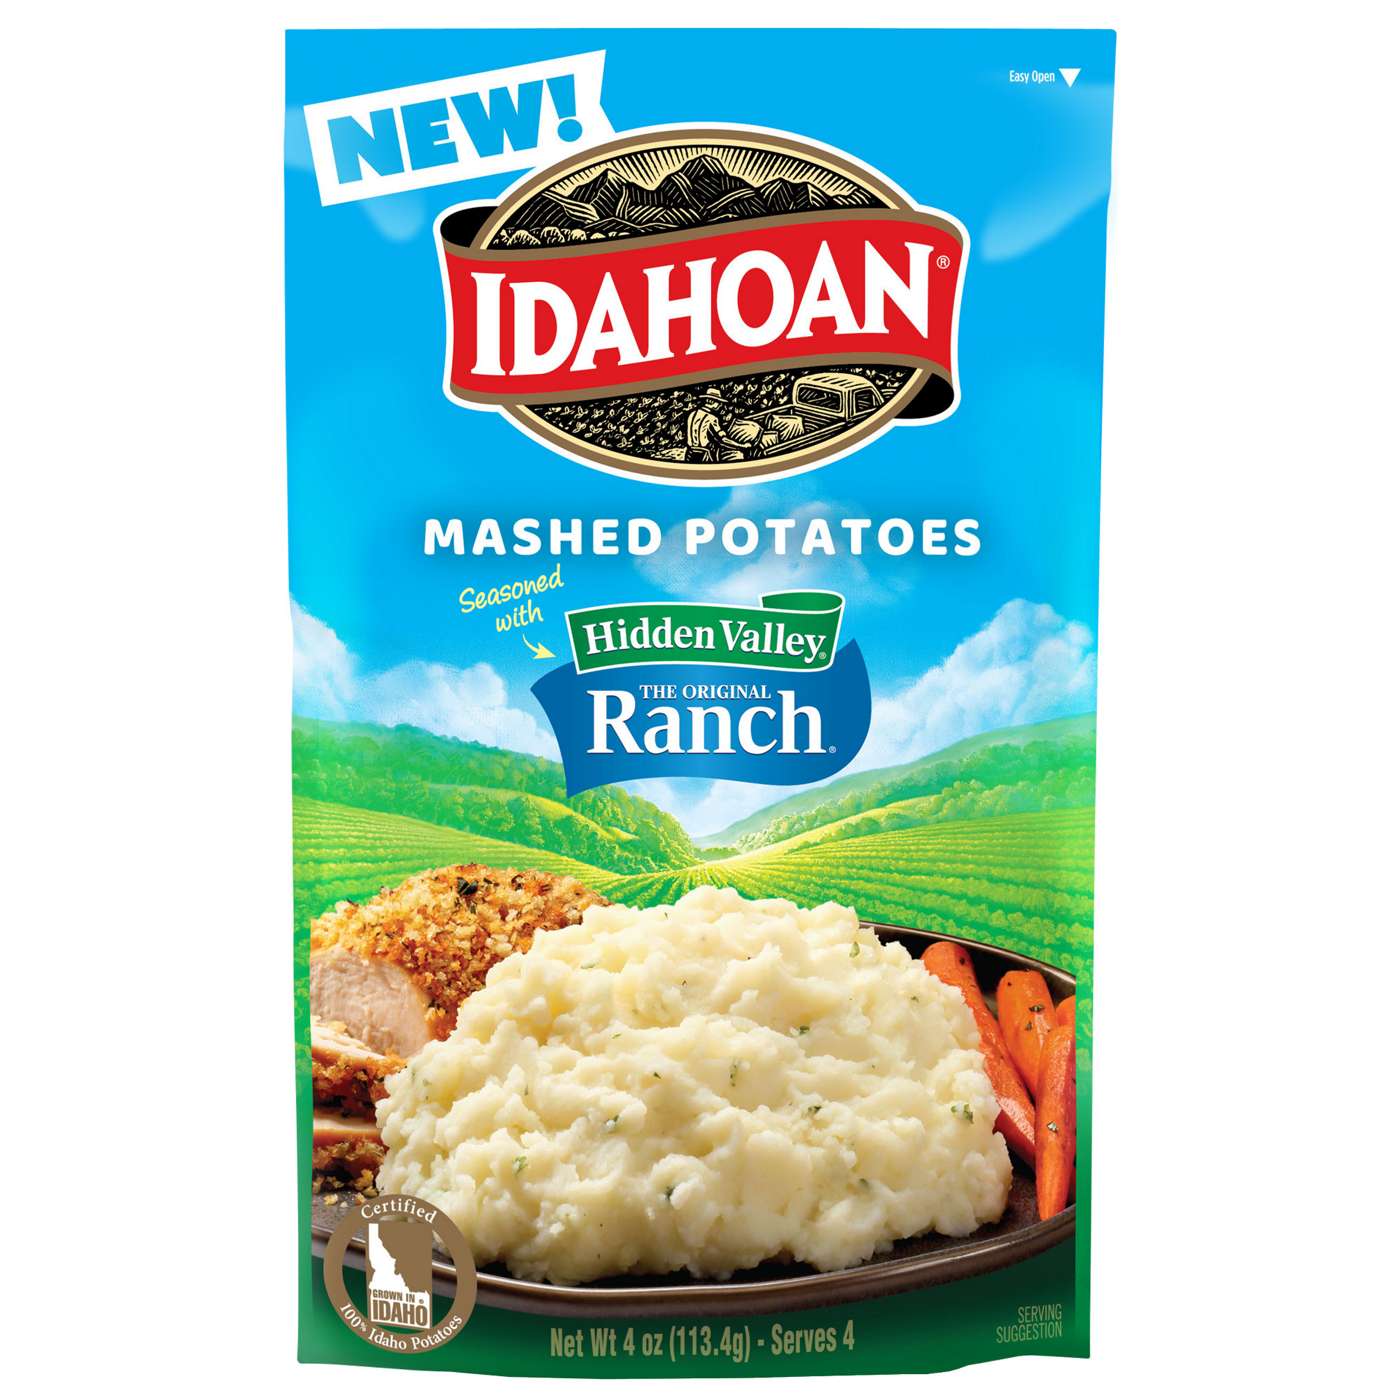 Idahoan Hidden Valley Ranch Mashed Potatoes; image 1 of 6